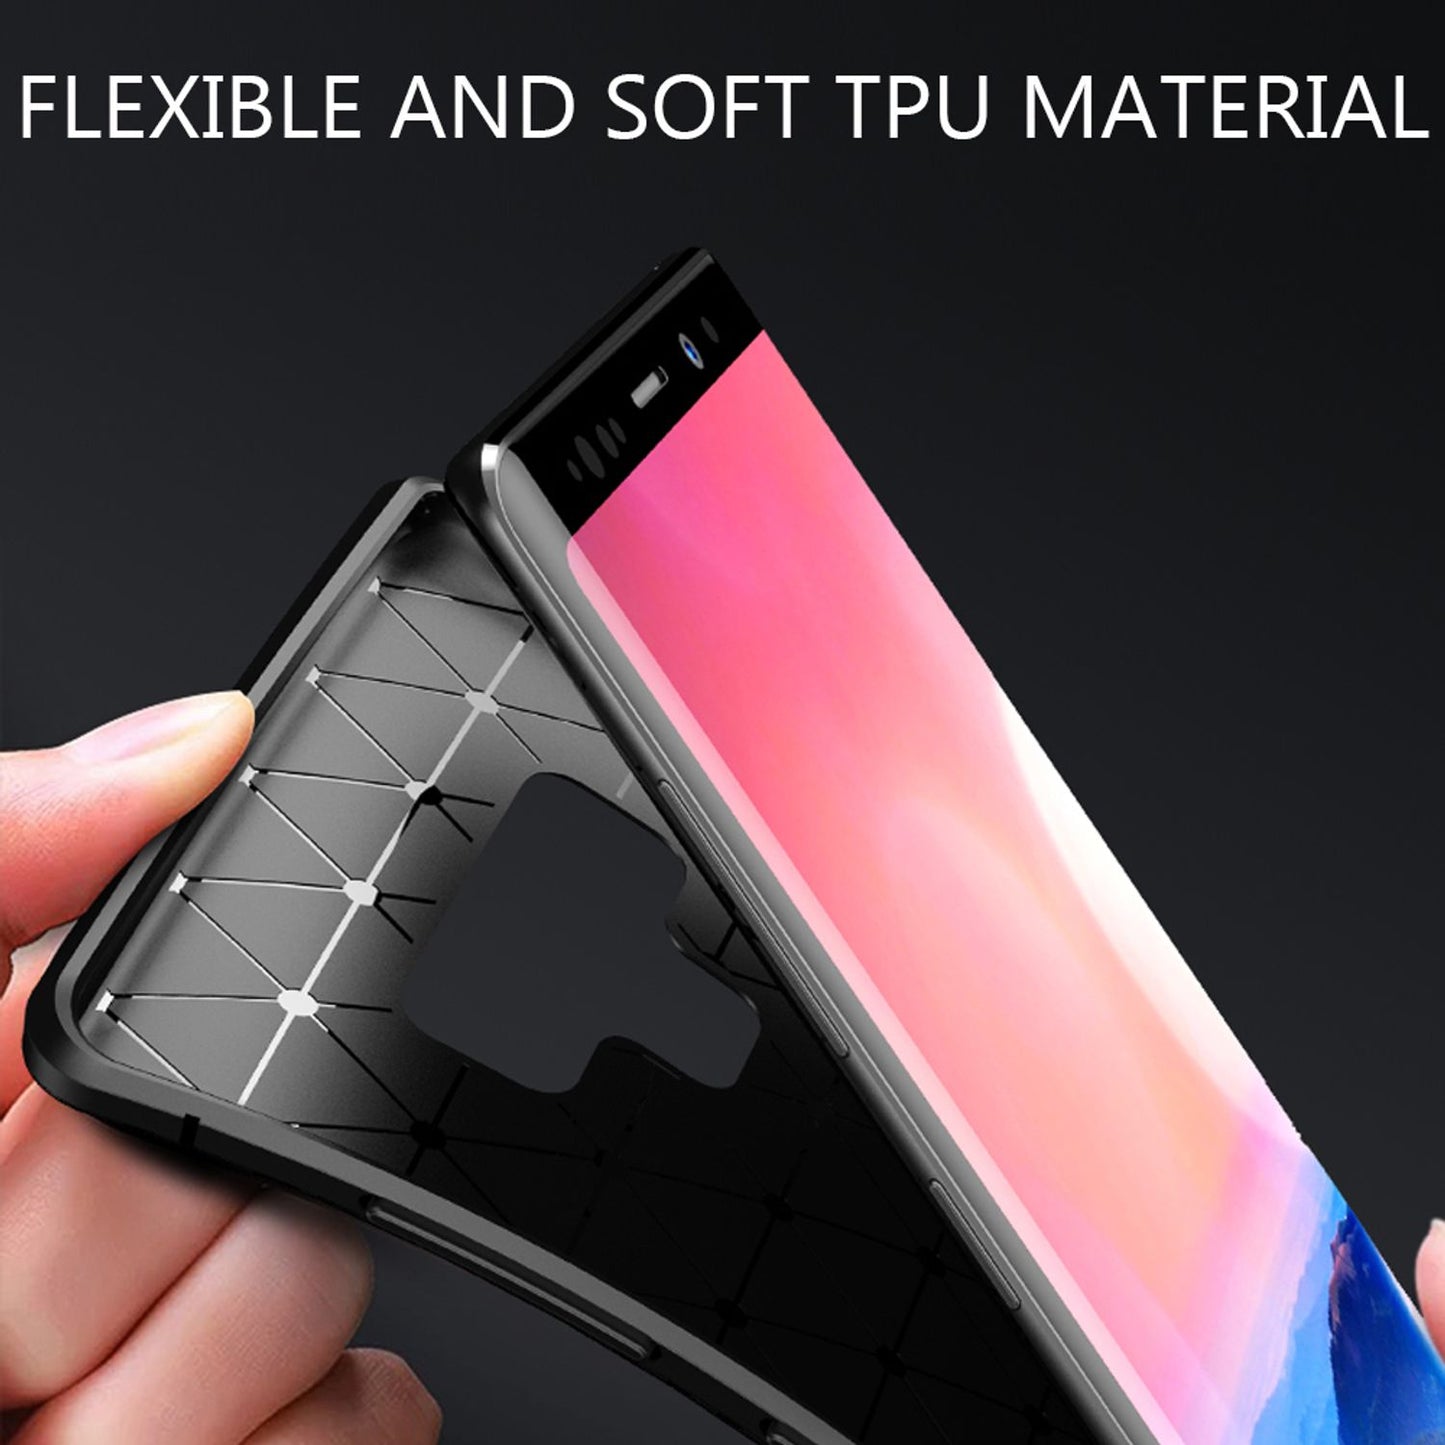 NALIA Handy Hülle für Samsung Galaxy Note 9, Slim Silikon Soft Case Cover Etui